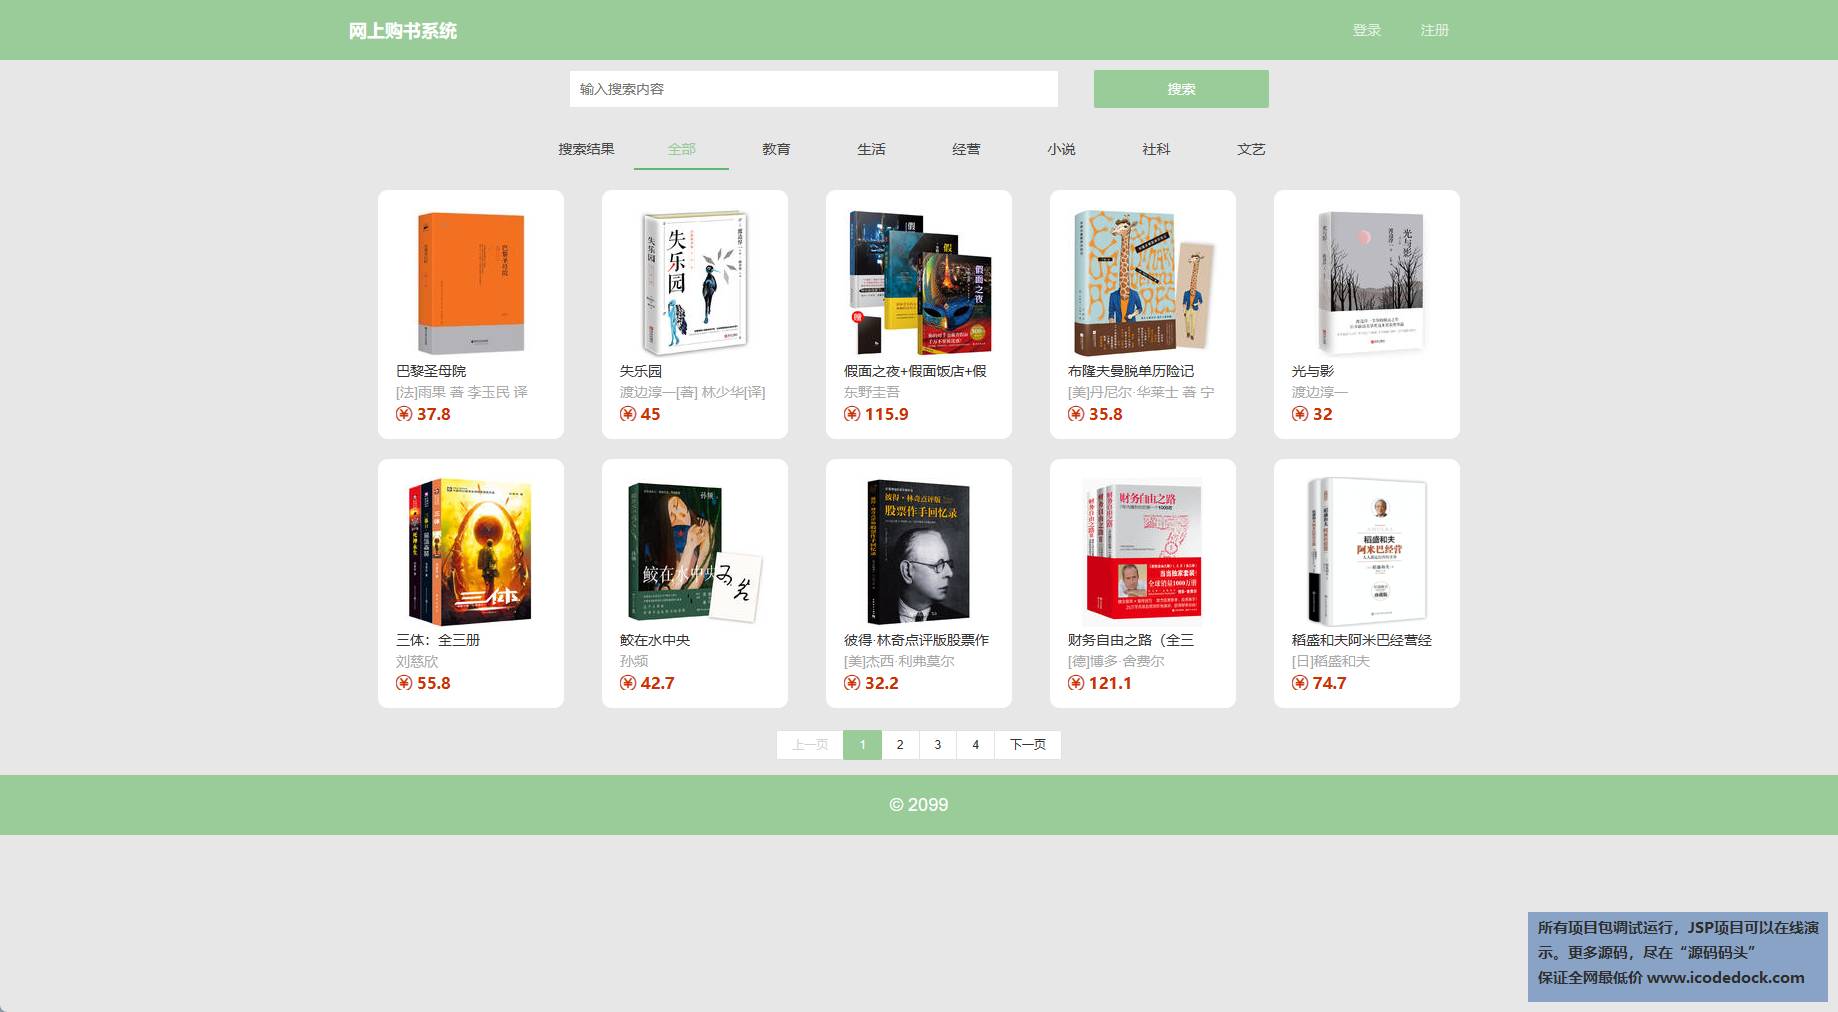 Springboot在线图书销售商城平台-用户角色-查看图书列表